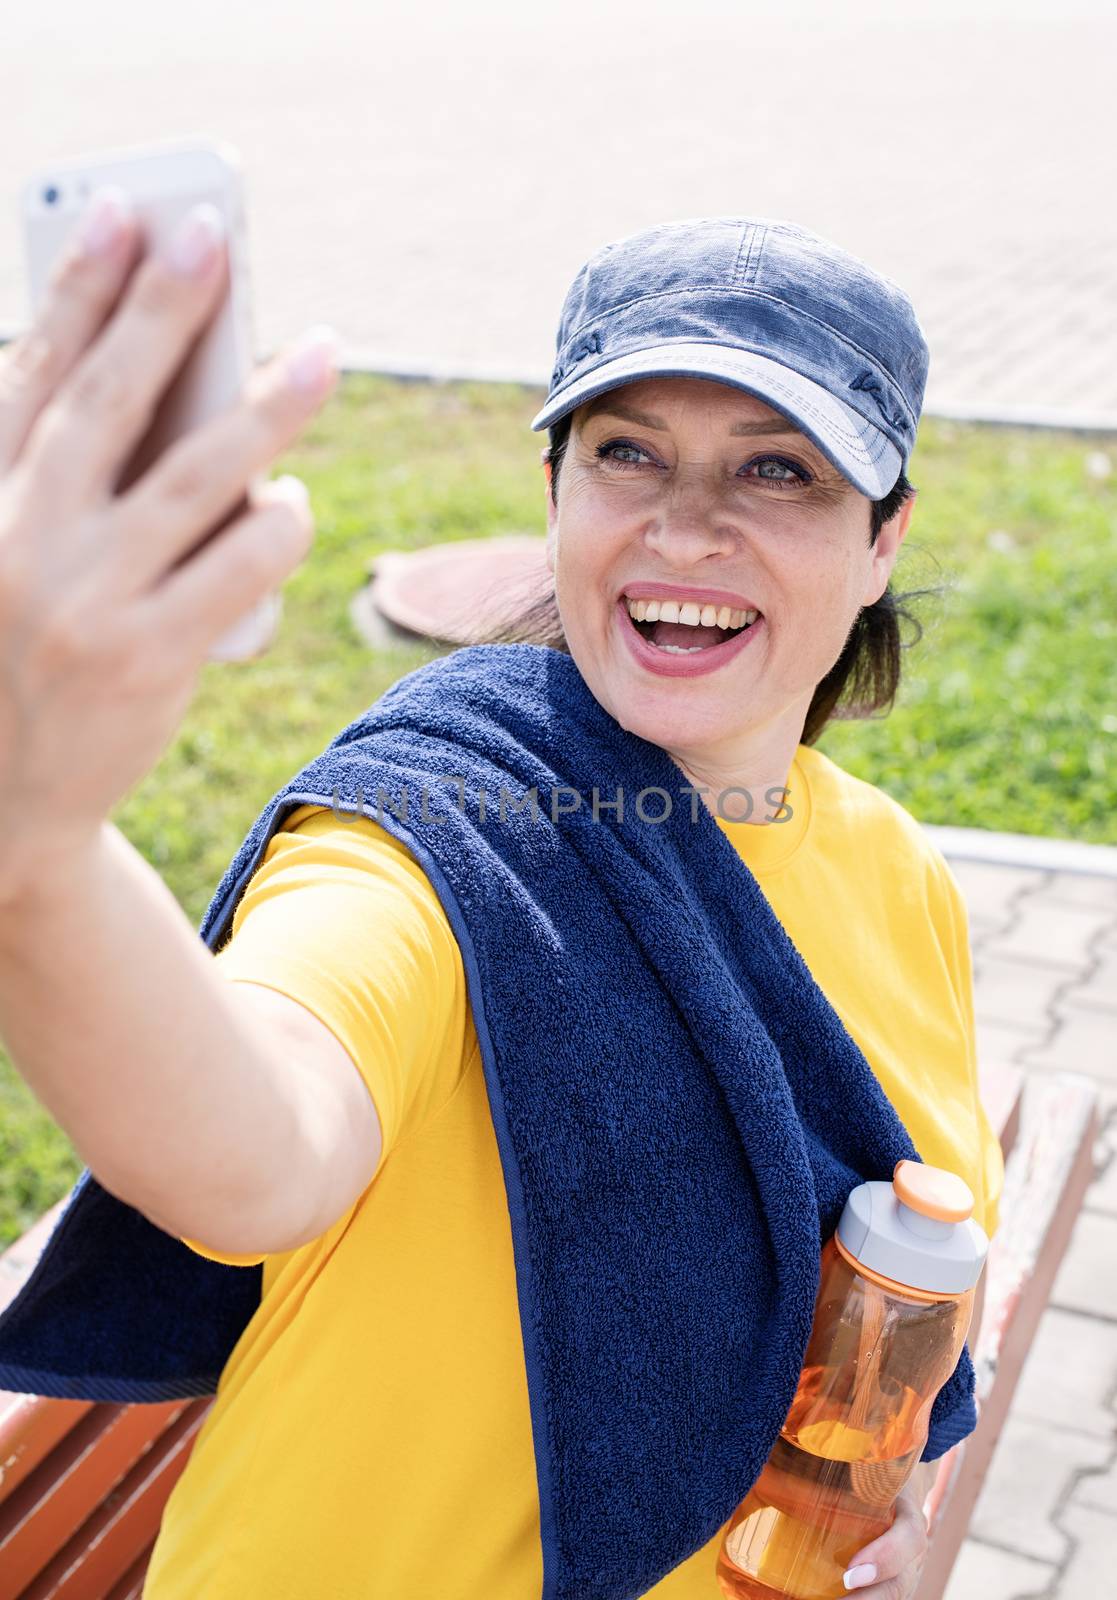 Smiling senior sportswoman doing selfie outdoors in the park by Desperada